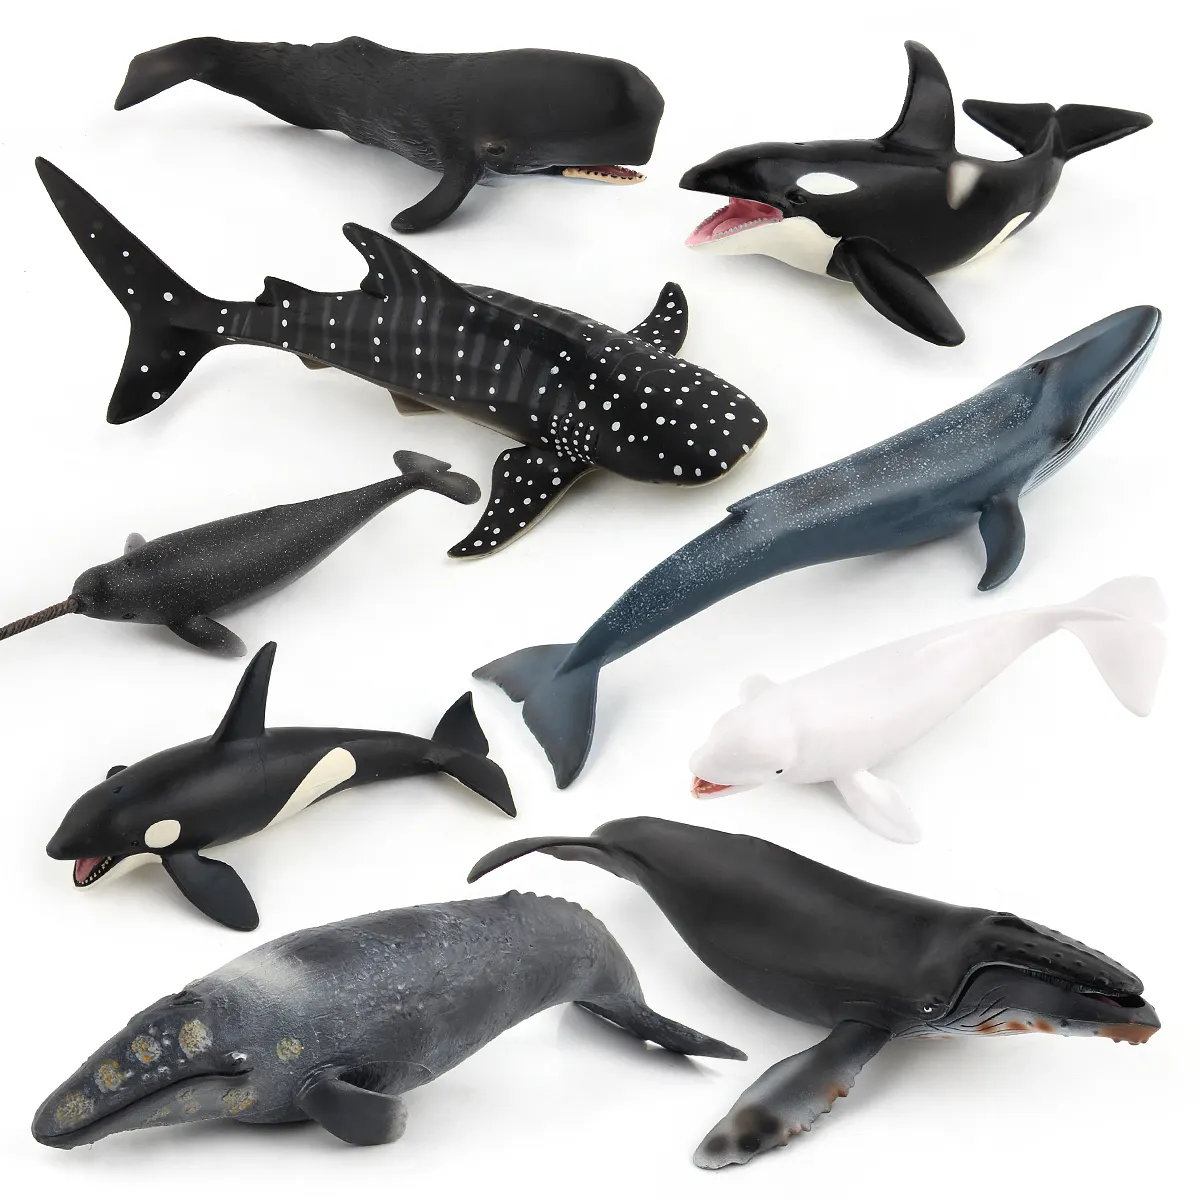 Levensechte Whale Model Plastic Marine Dier Speelgoed Schaal Whale Model Serie 9 Diverse Effen Statische Modellen